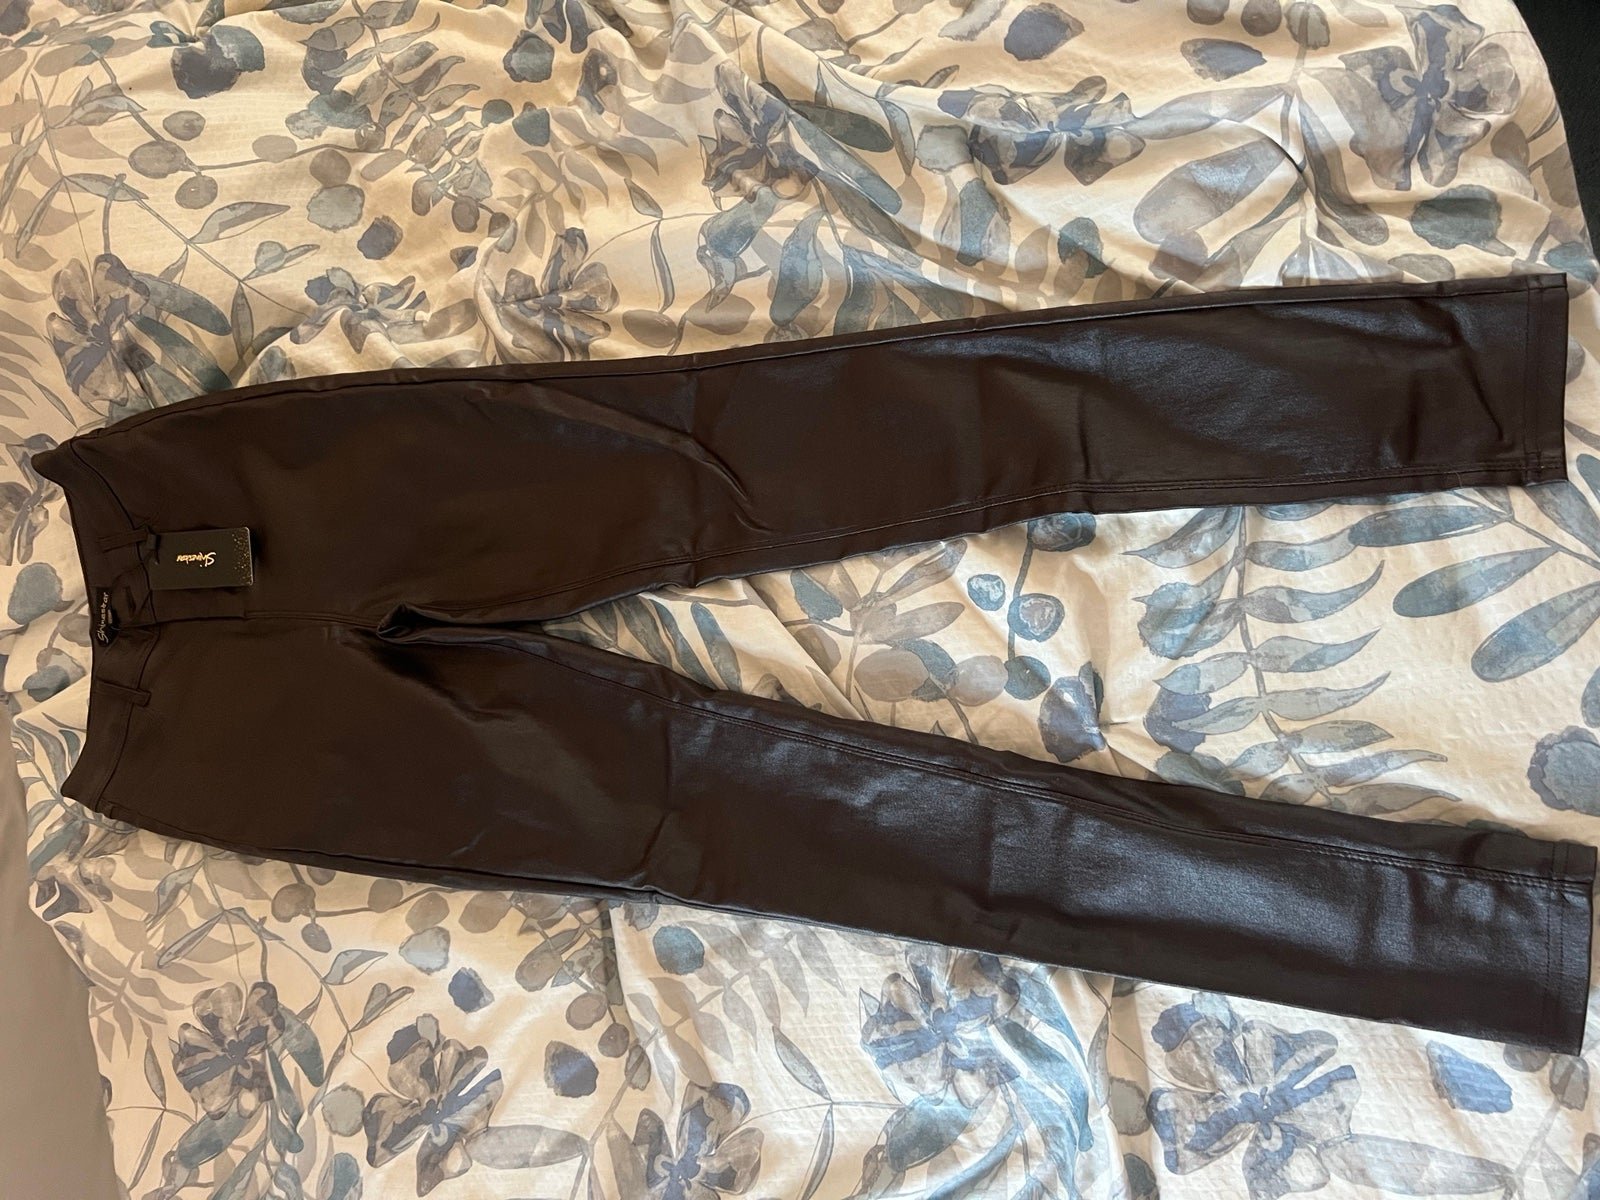 The Best Seller Brown leather pants IBVrbdju1 for sale